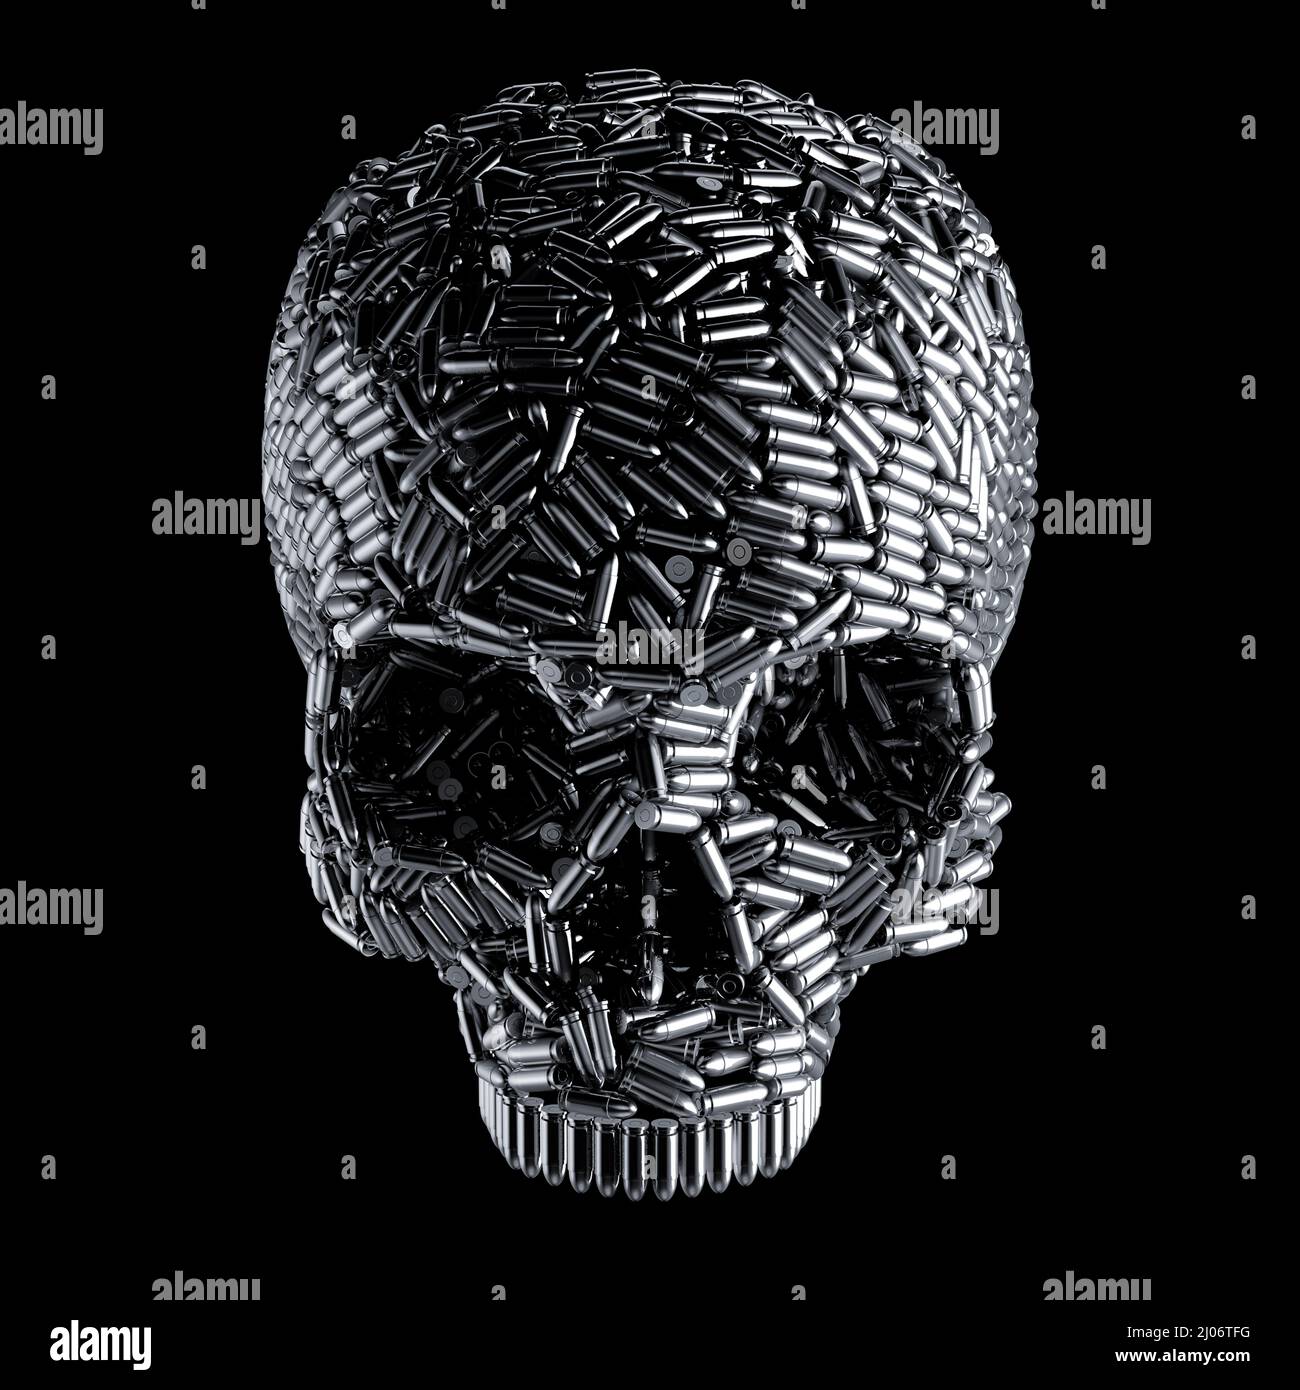 Bullet skull handgun metaphor - 3D illustration of pistol ammunition forming human cranium isolated on black Stock Photo